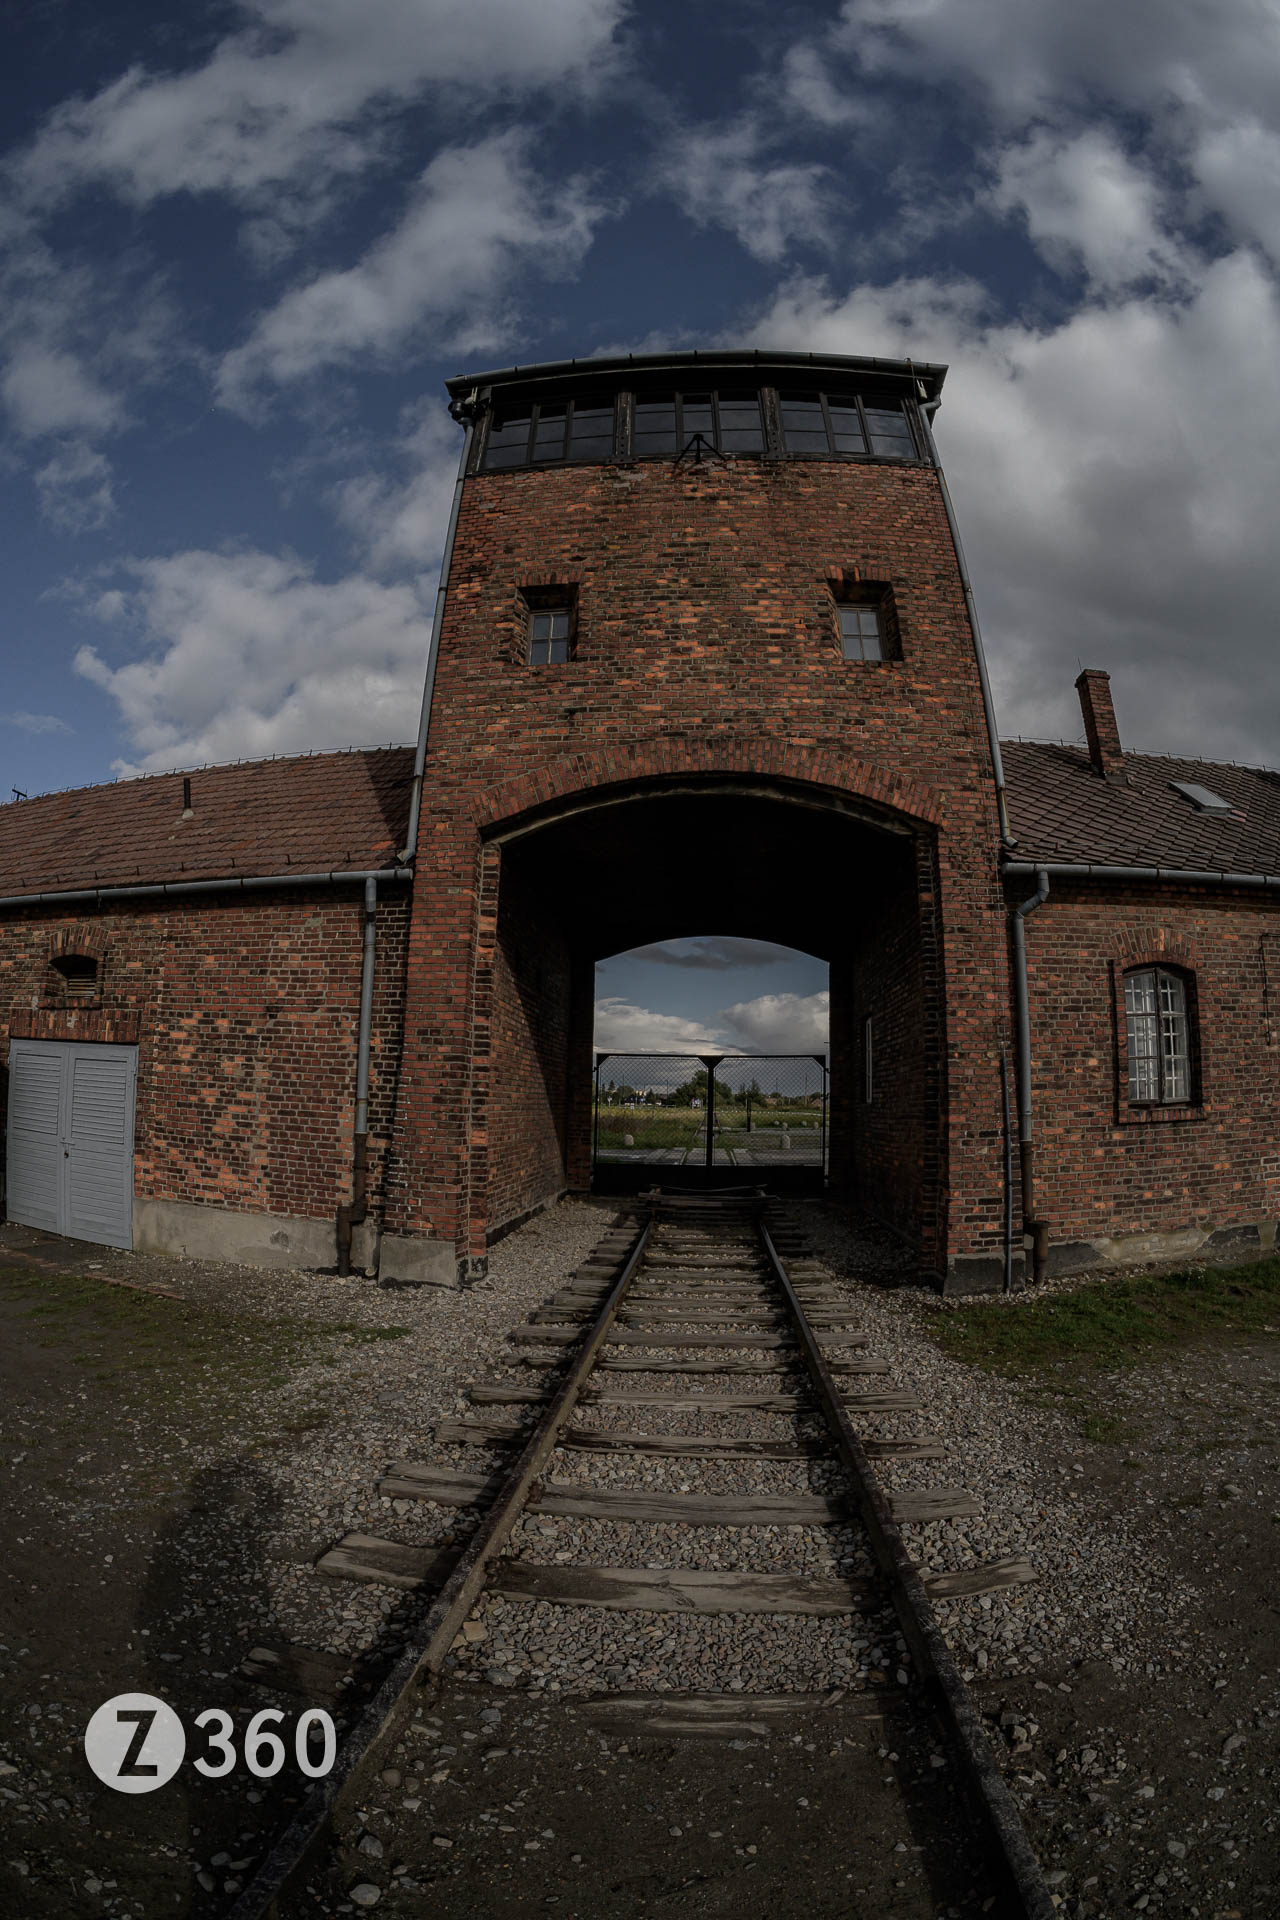 The Entrance to Auschwitz II, Birkenau, Camp side